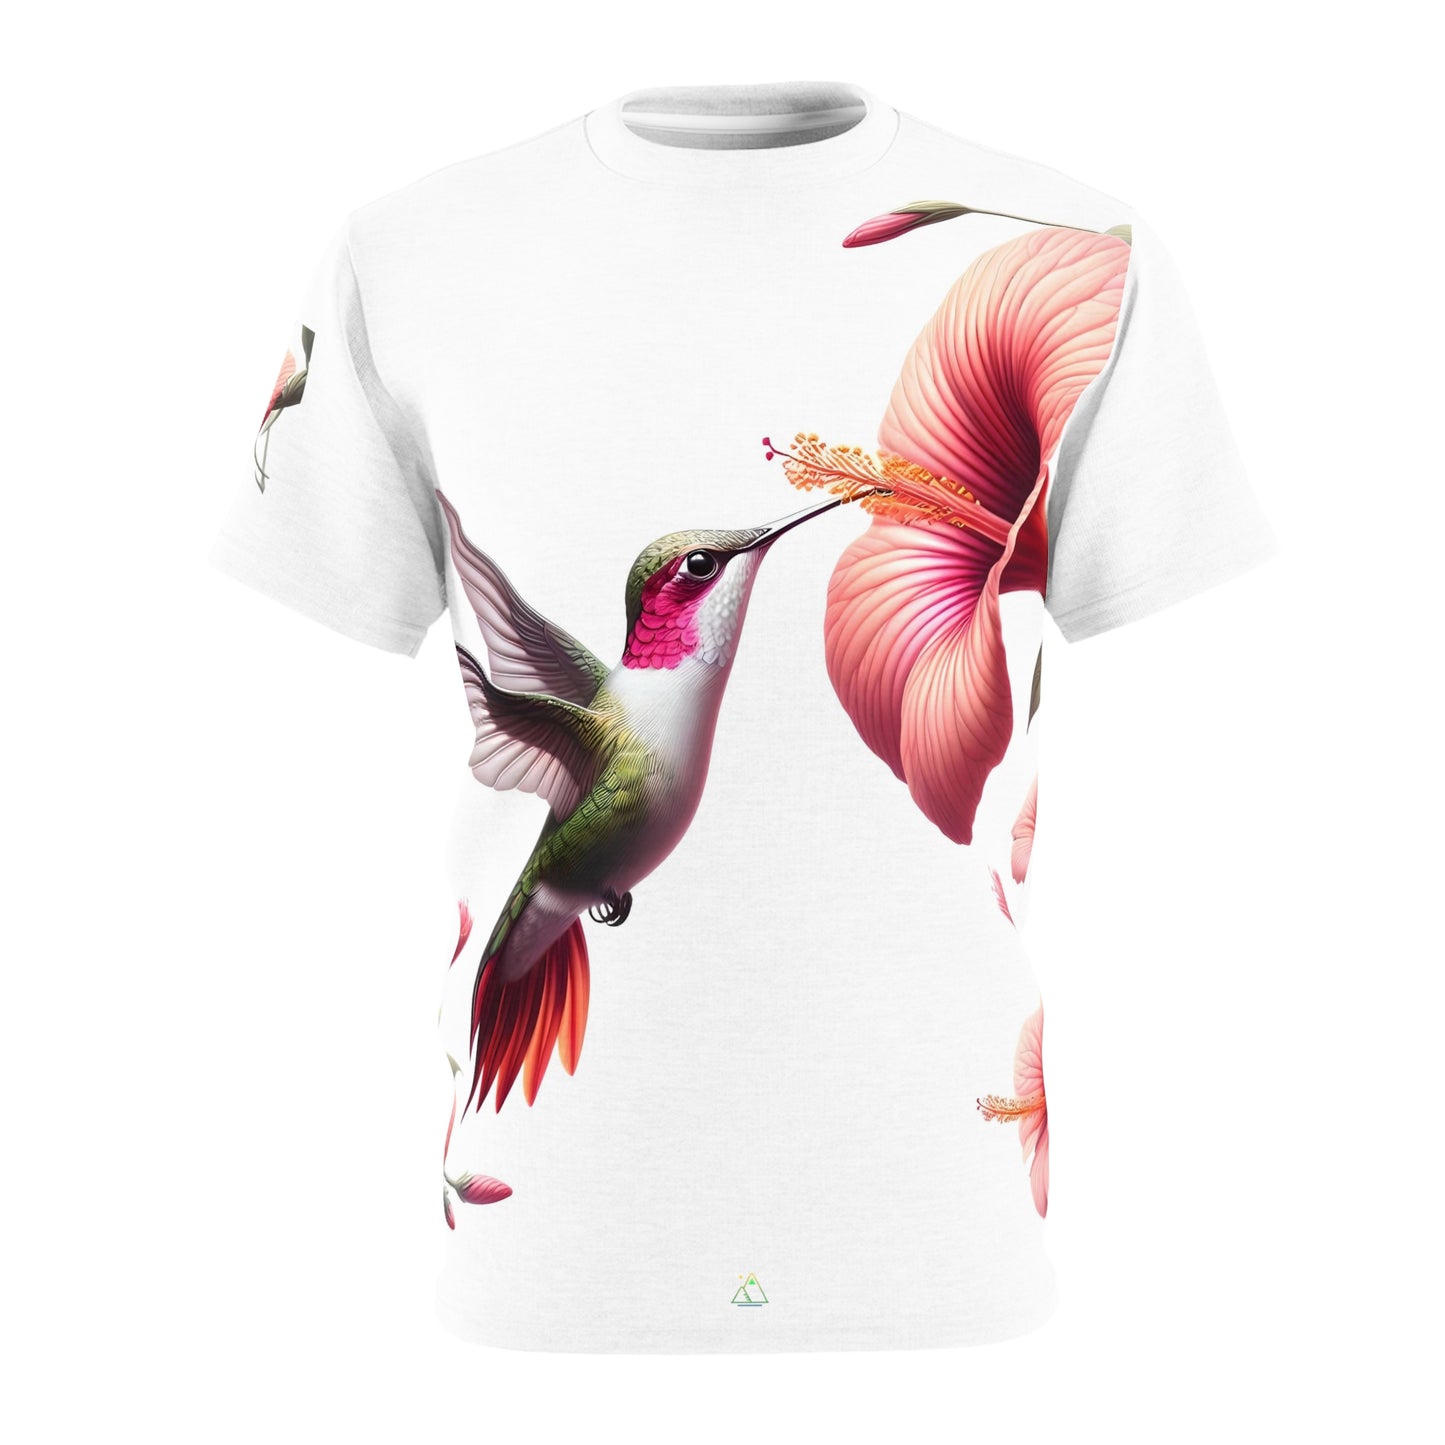 Hummingbird and Flower All-Over Print Shirt | Elegant Nature-Inspired Design